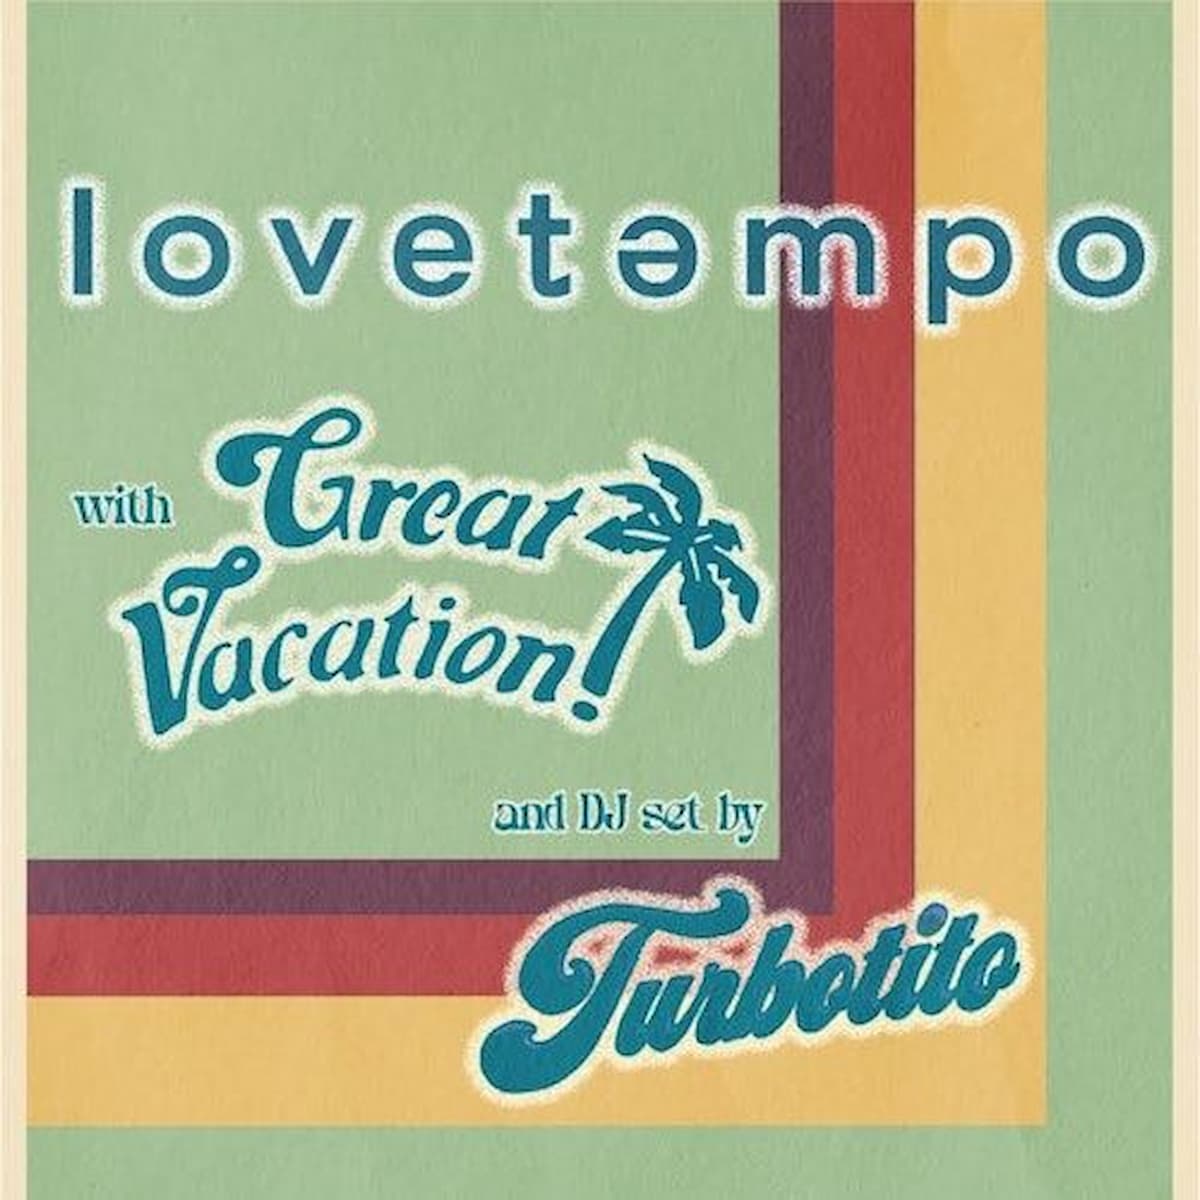 lovetempo / Great Vacation / Turbotito (DJ)